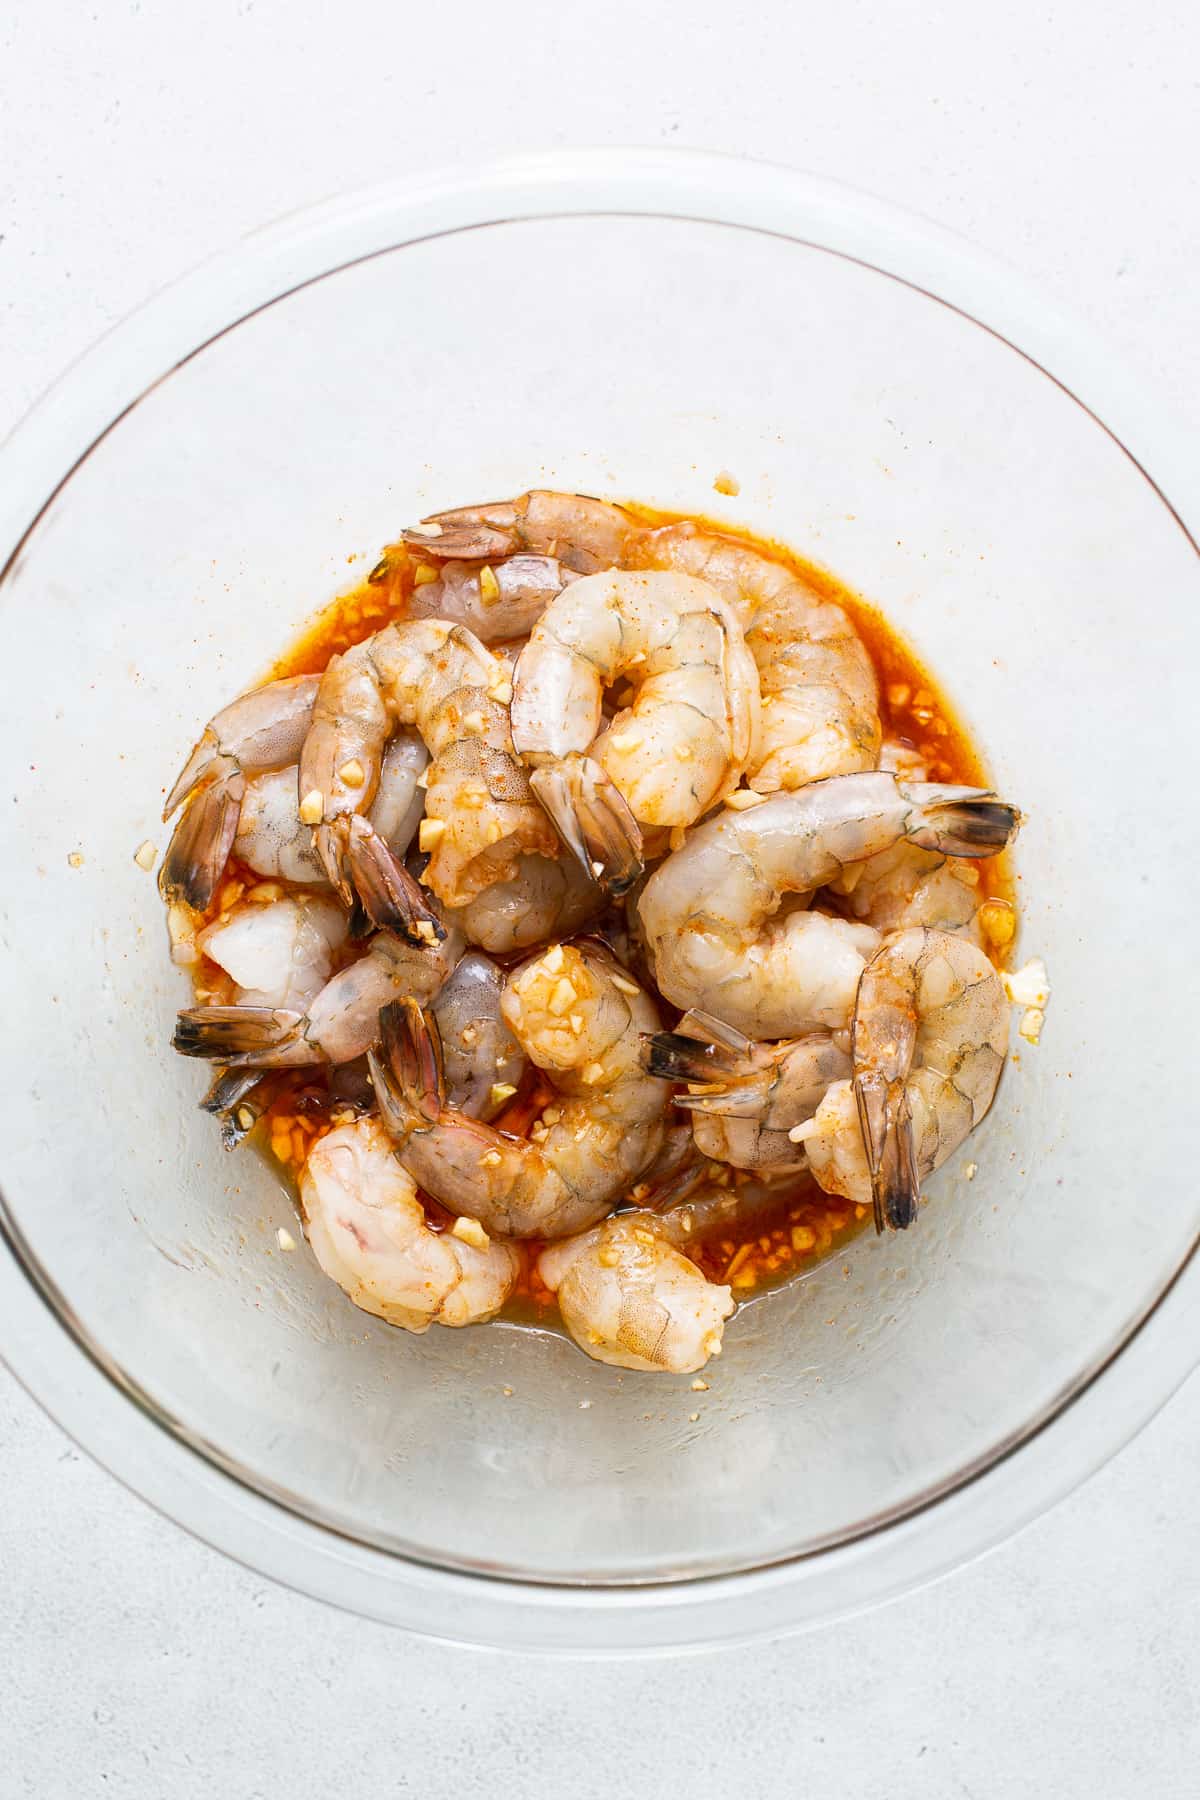 Raw shrimp marinating in a bowl.